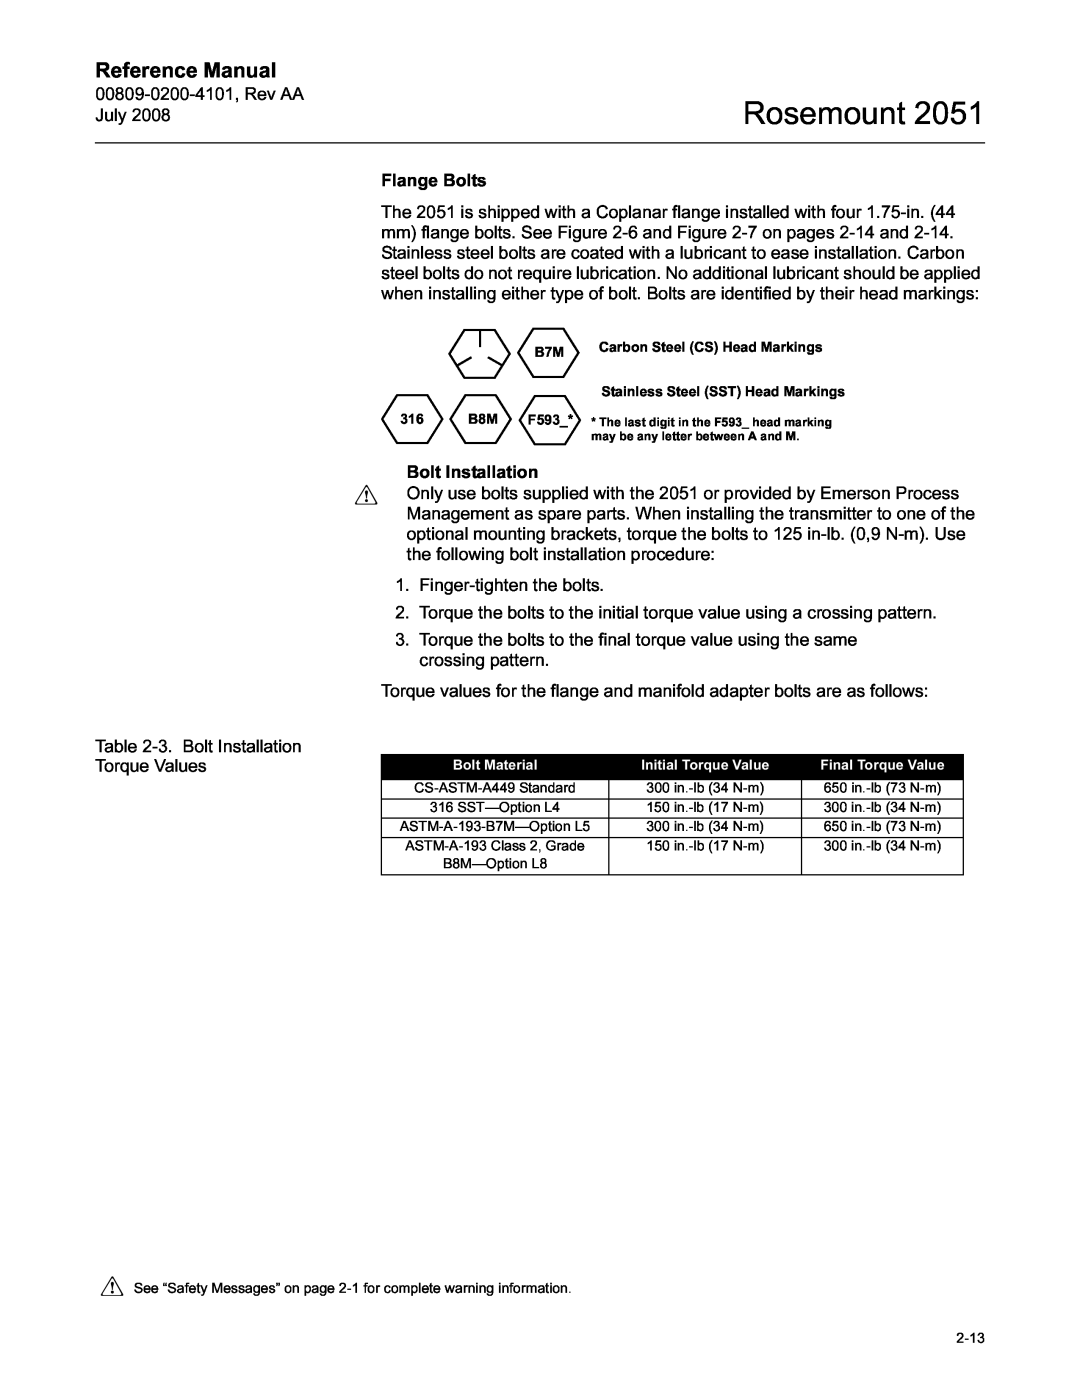 Emerson Process Management 2051 manual Rosemount, Reference Manual, 00809-0200-4101,Rev AA July 